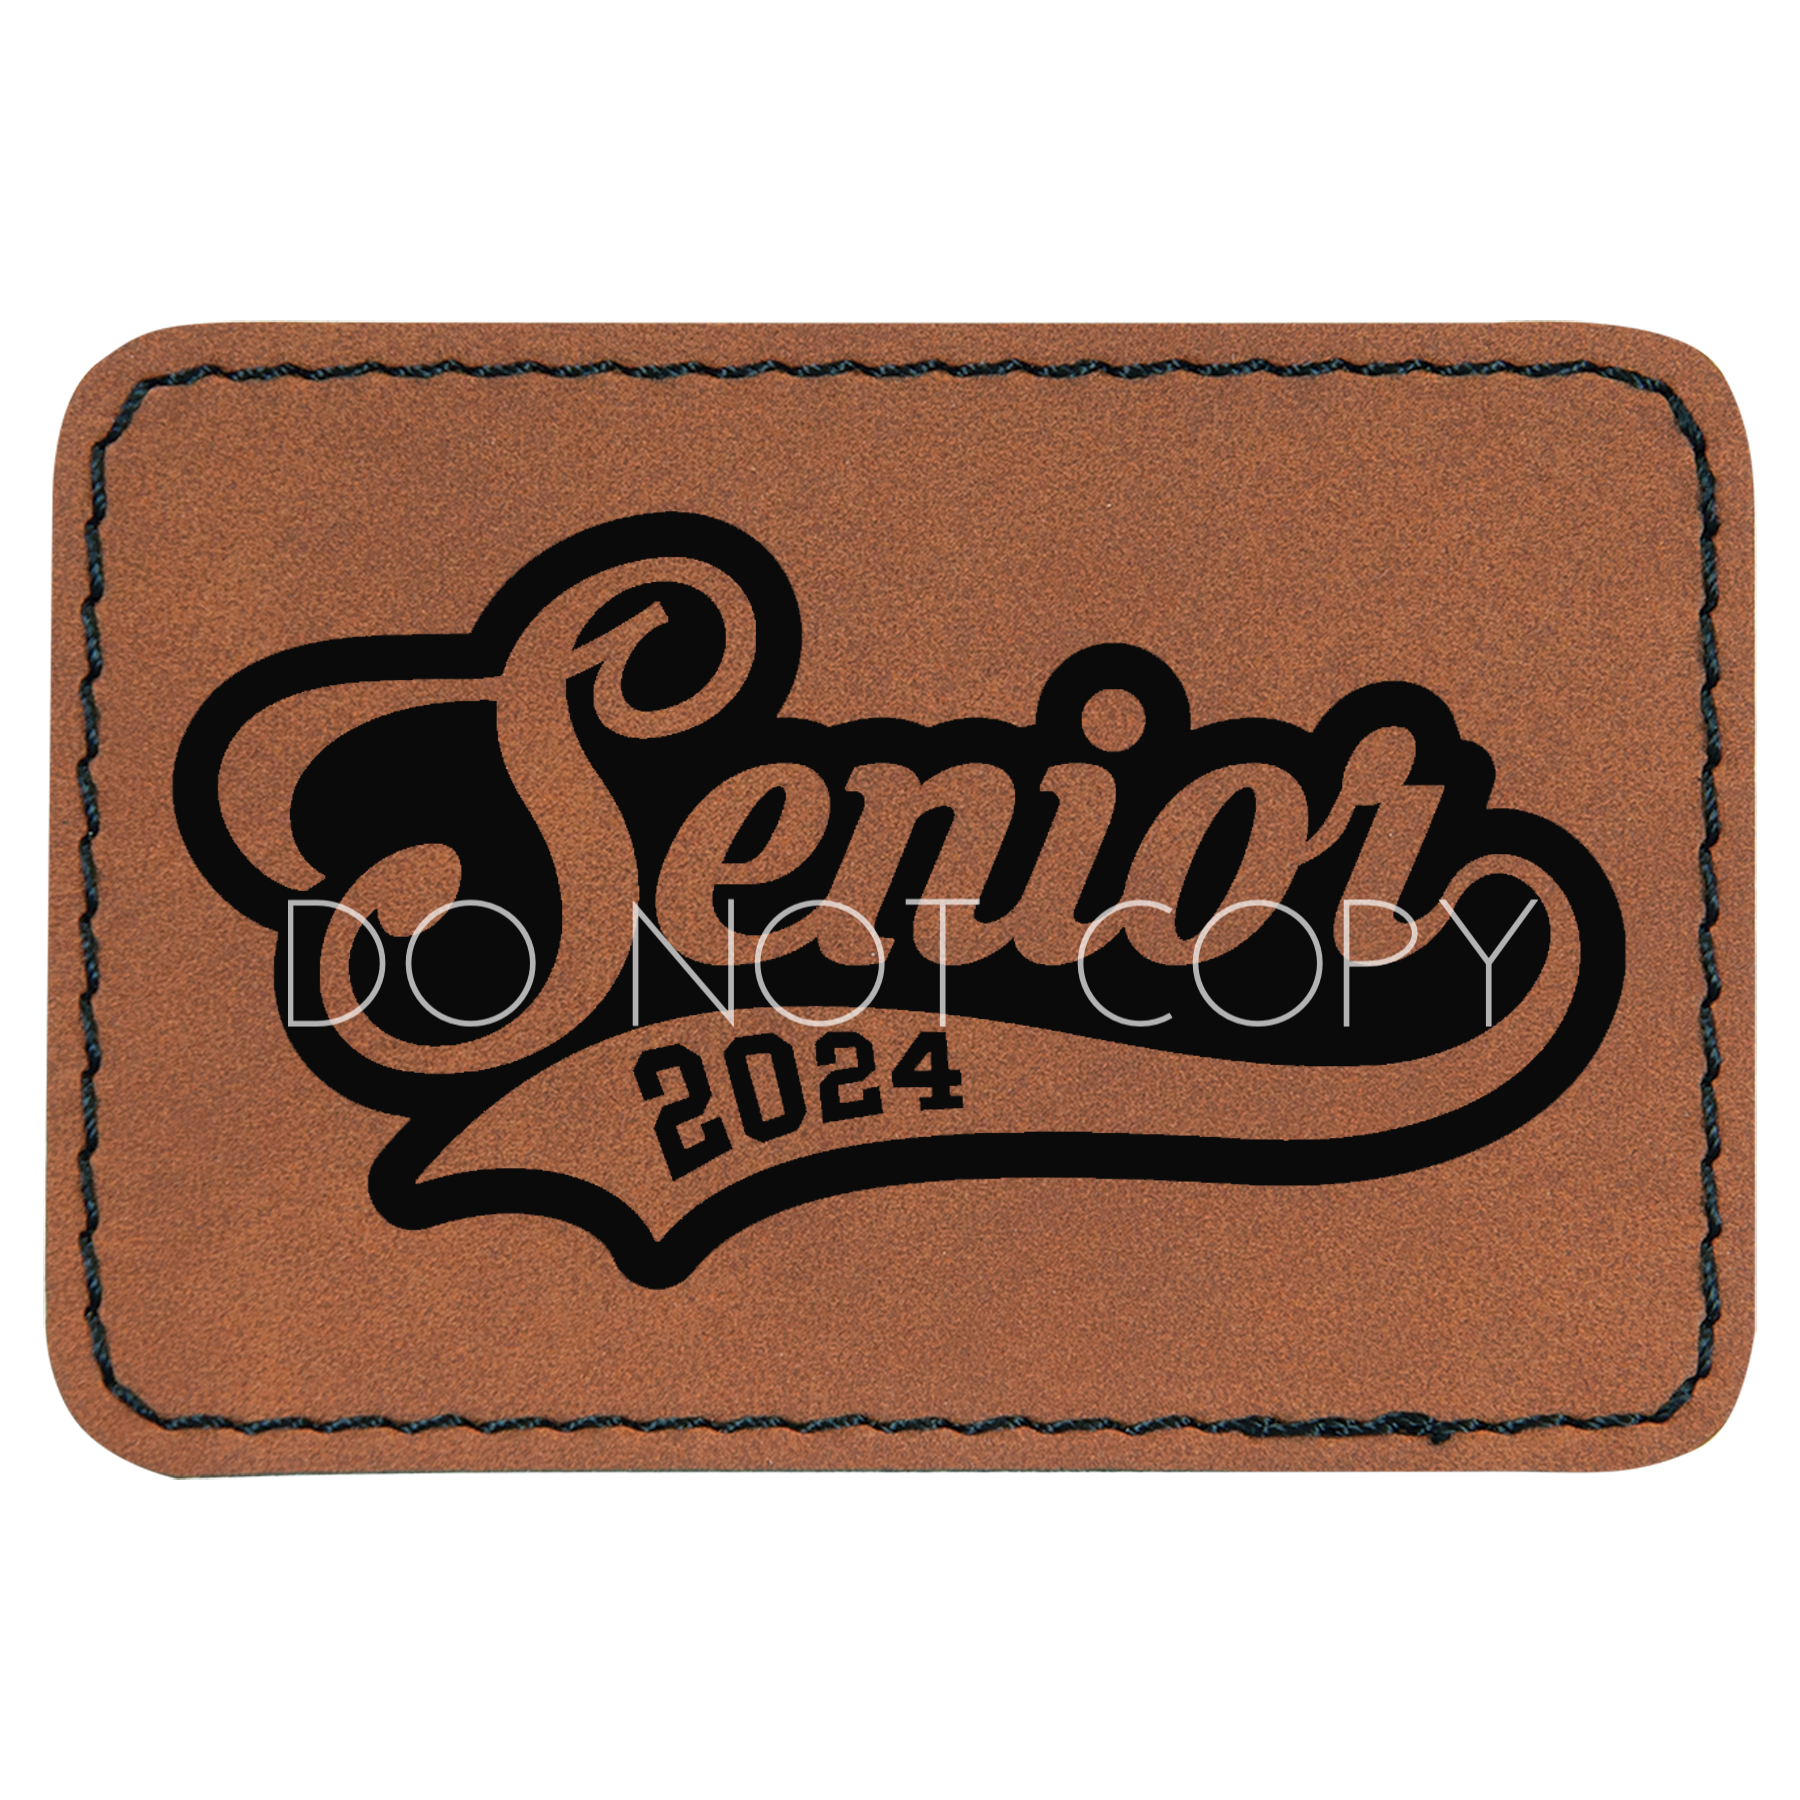 Senior 2024 Retro Patch